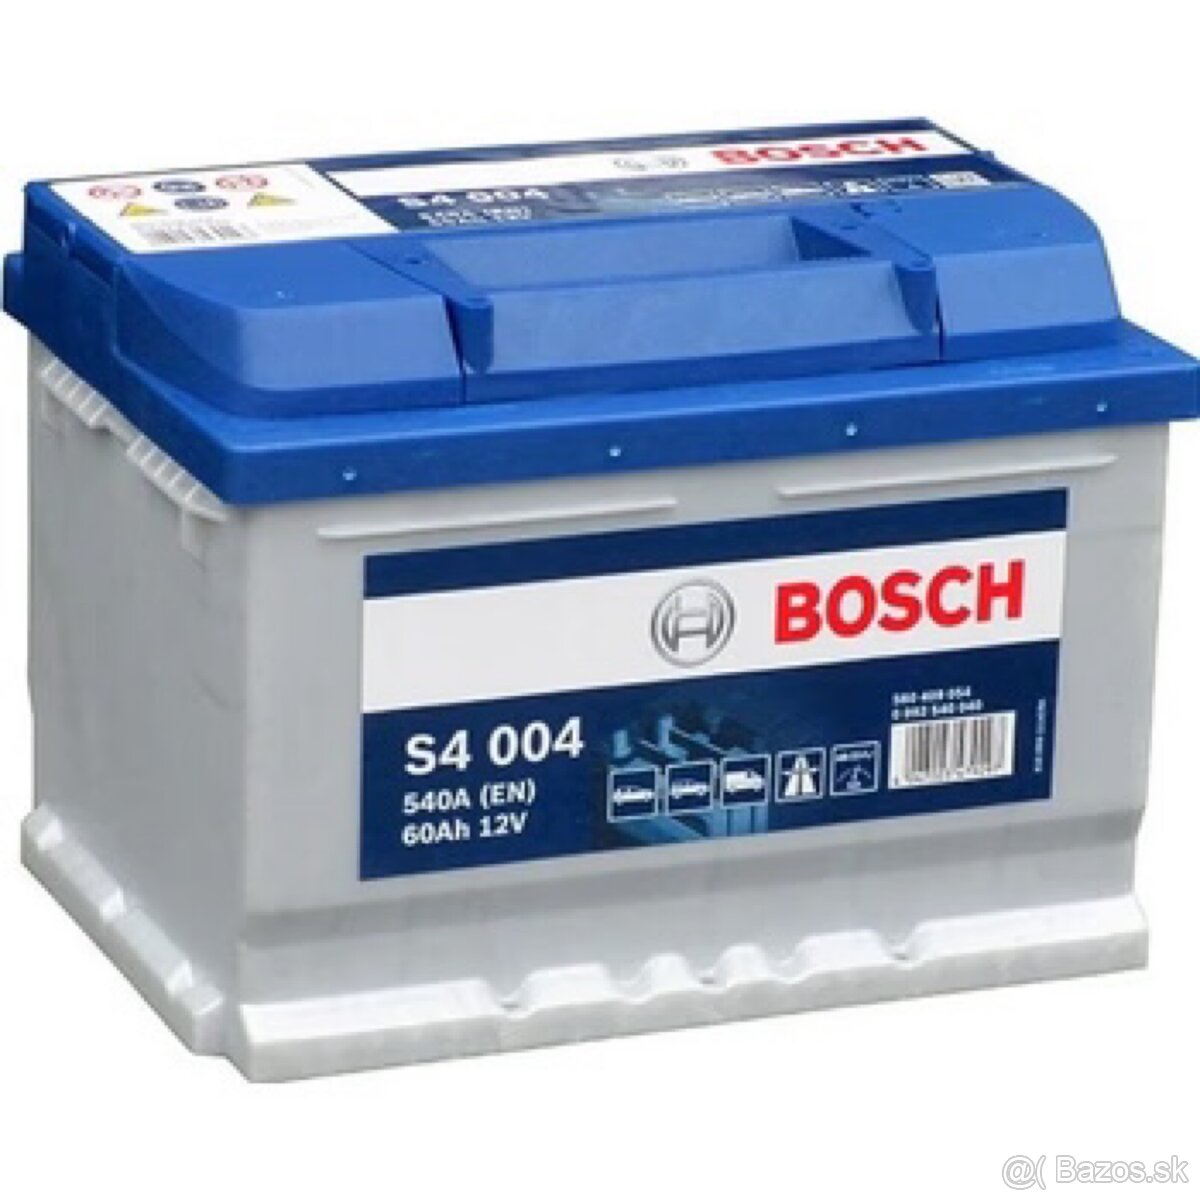 Bosh 60ah 540a autobatéria akumulátor